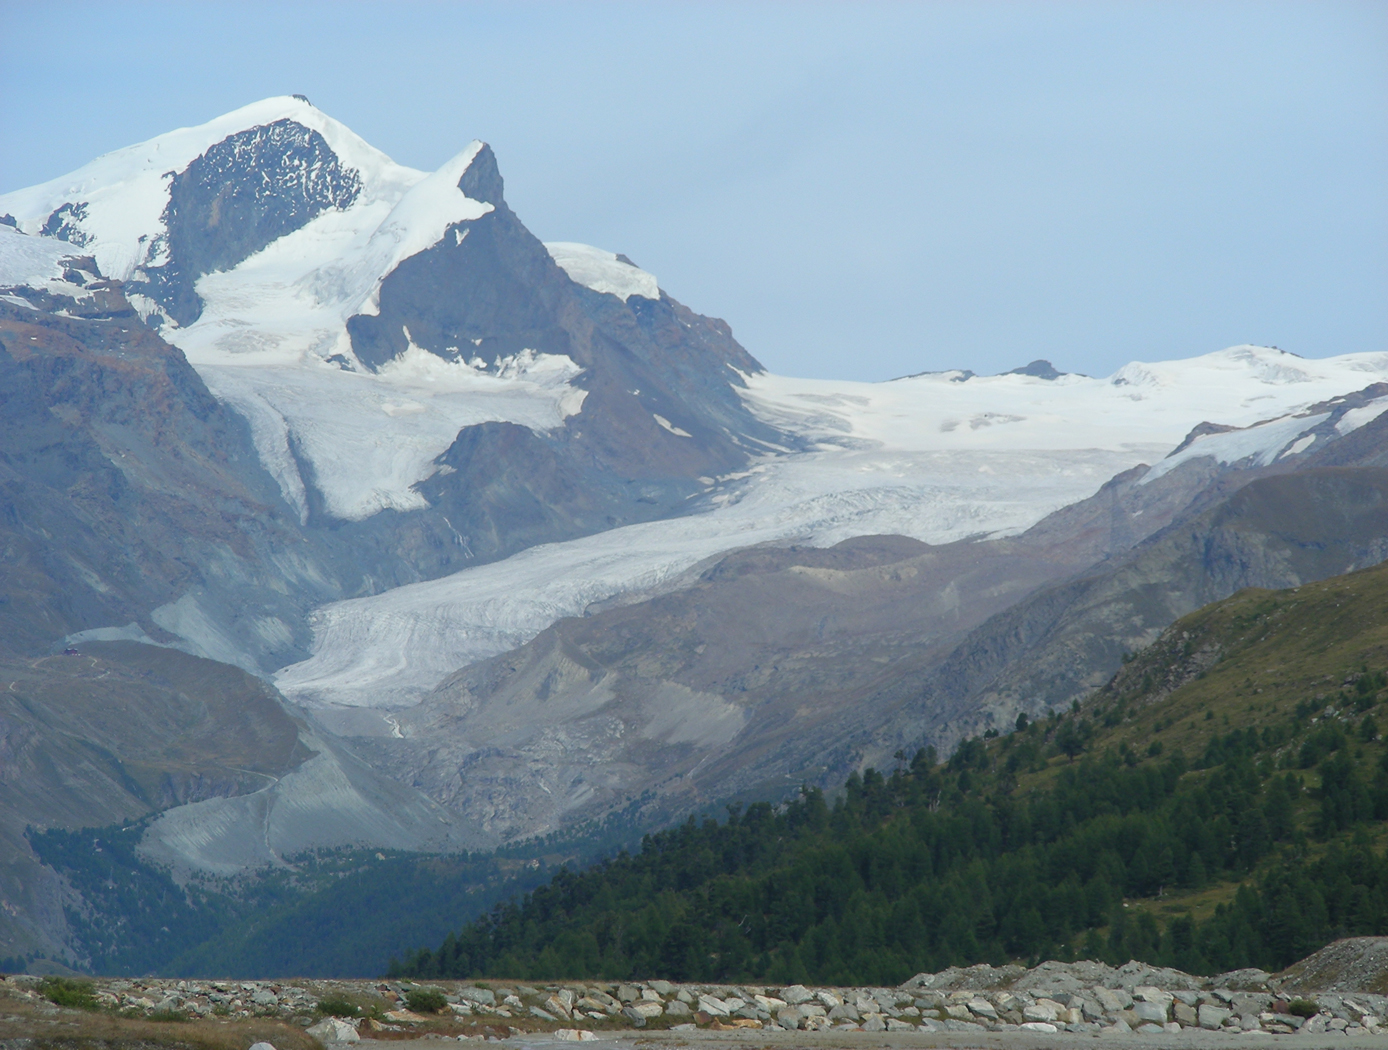 Studying How Debris Influences Glaciers